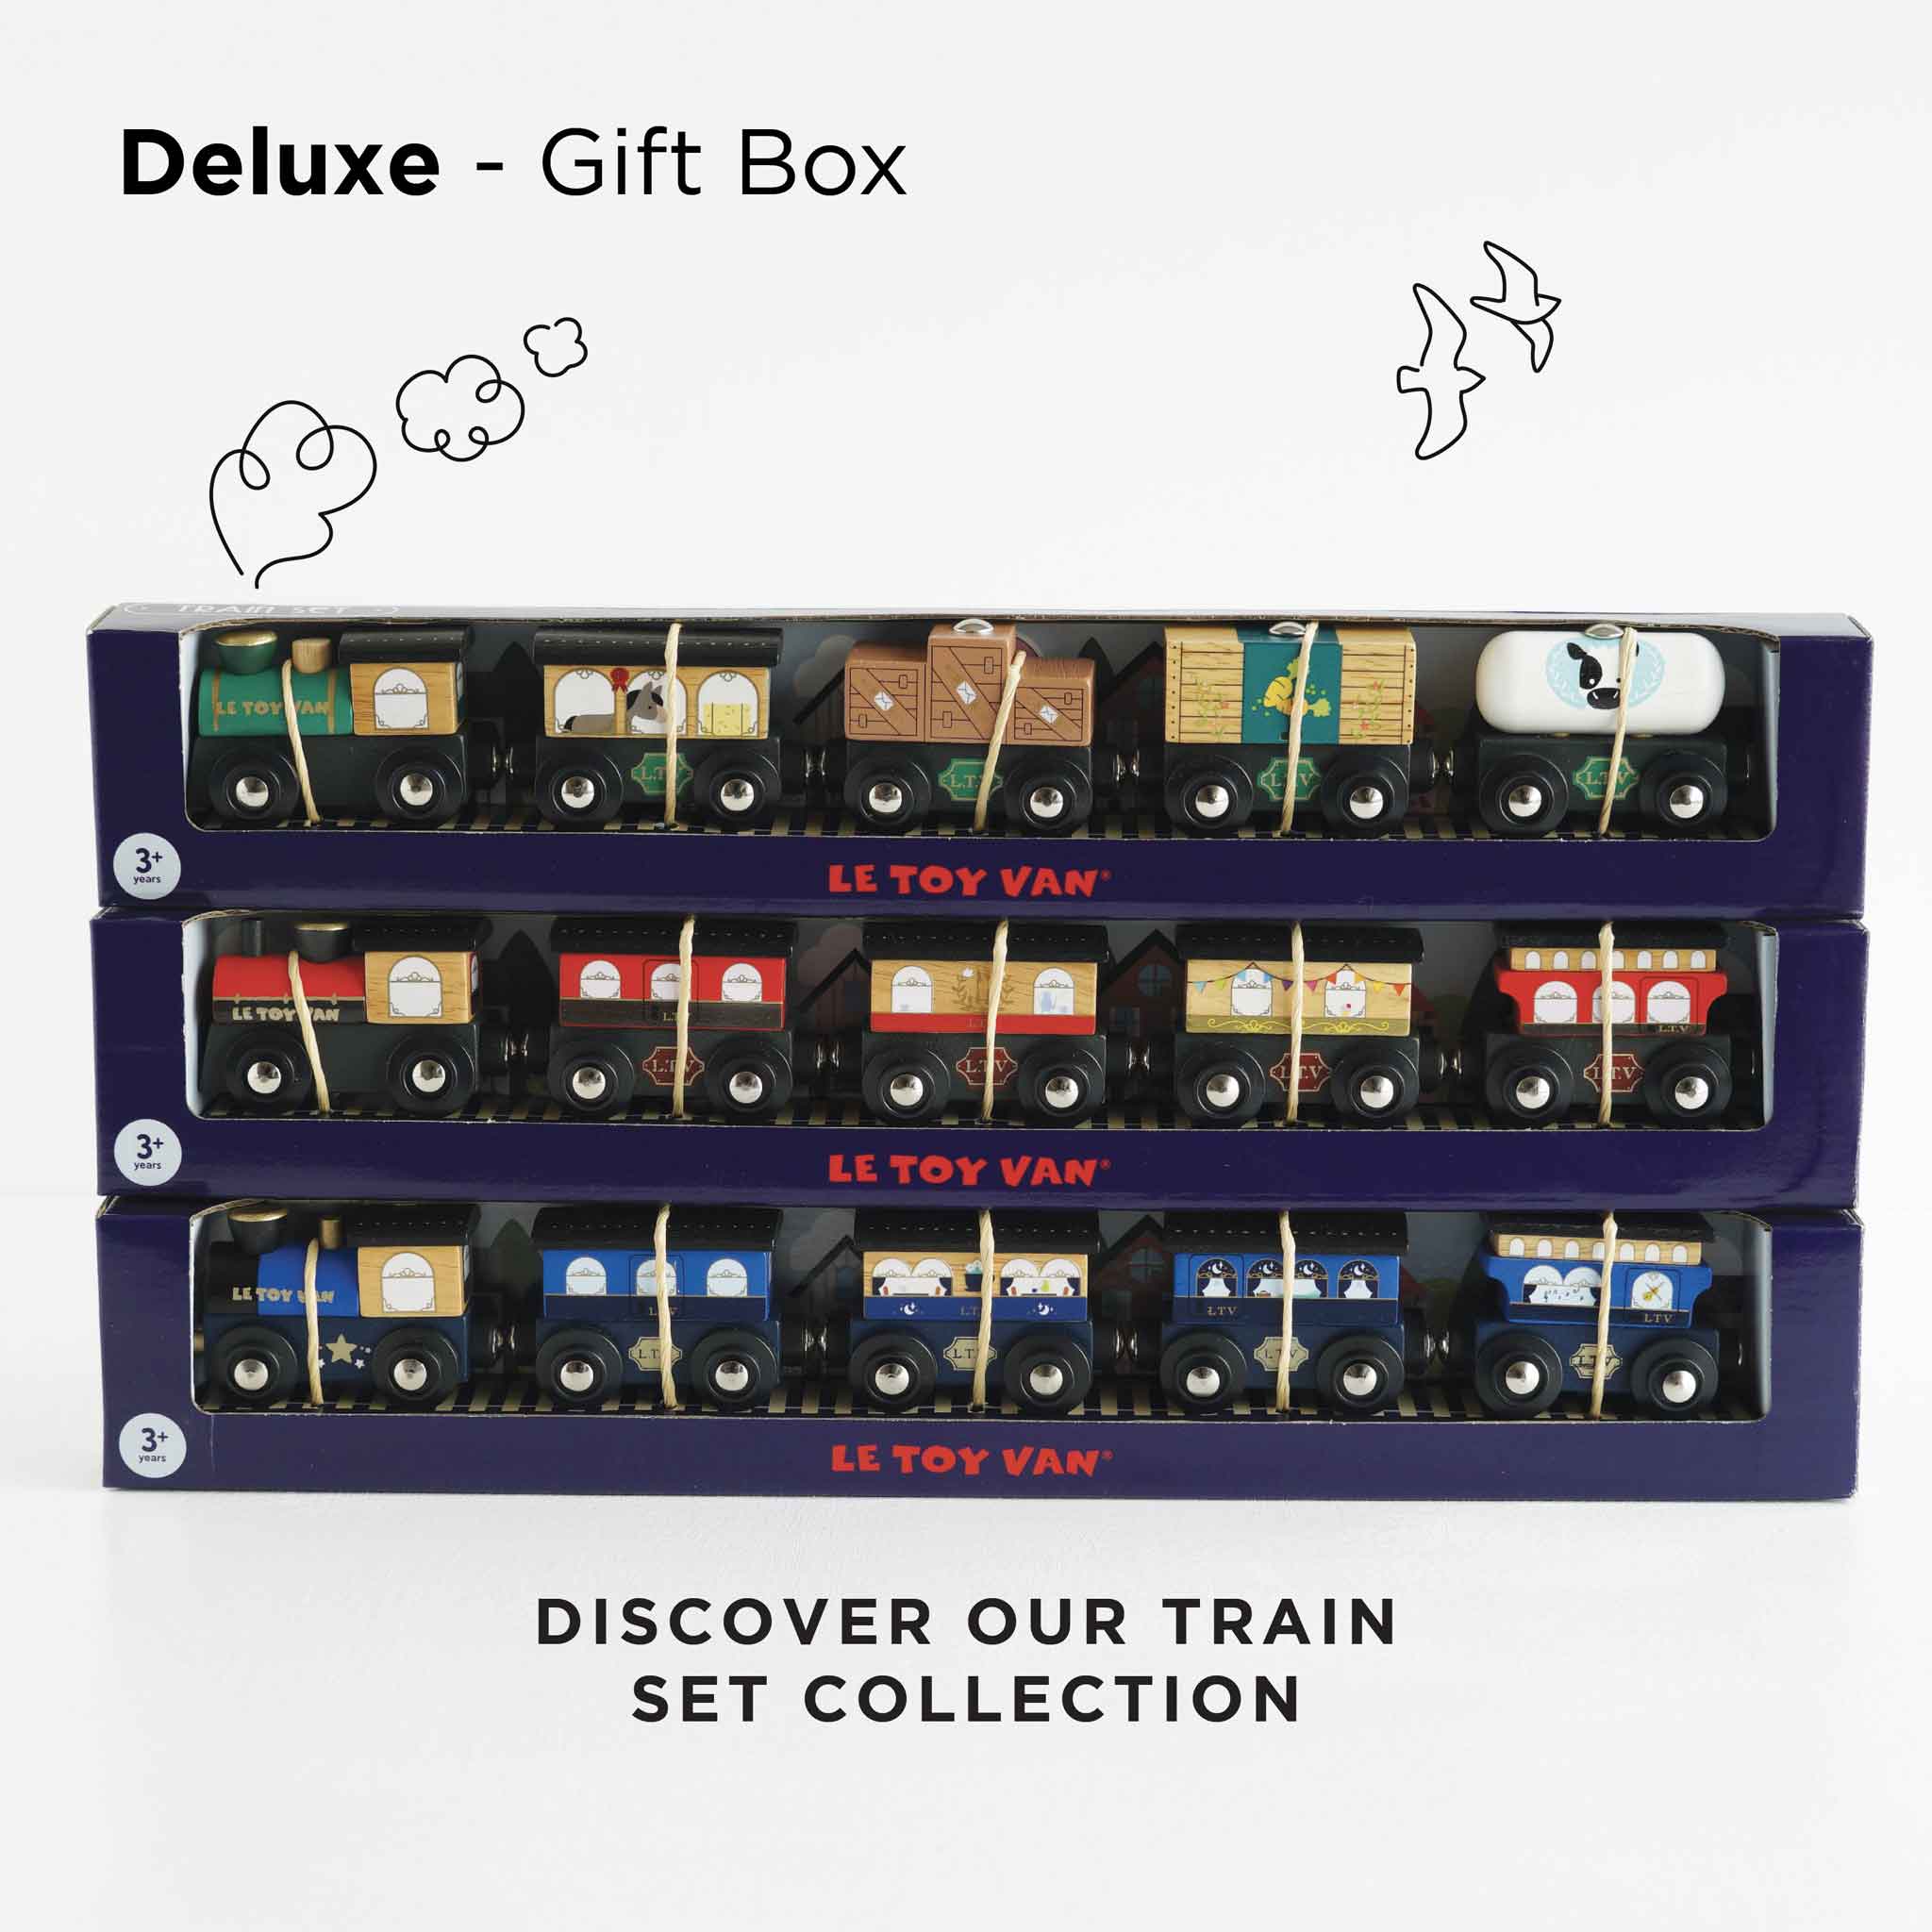 TV710-royal-express-train-gift-set-packaging